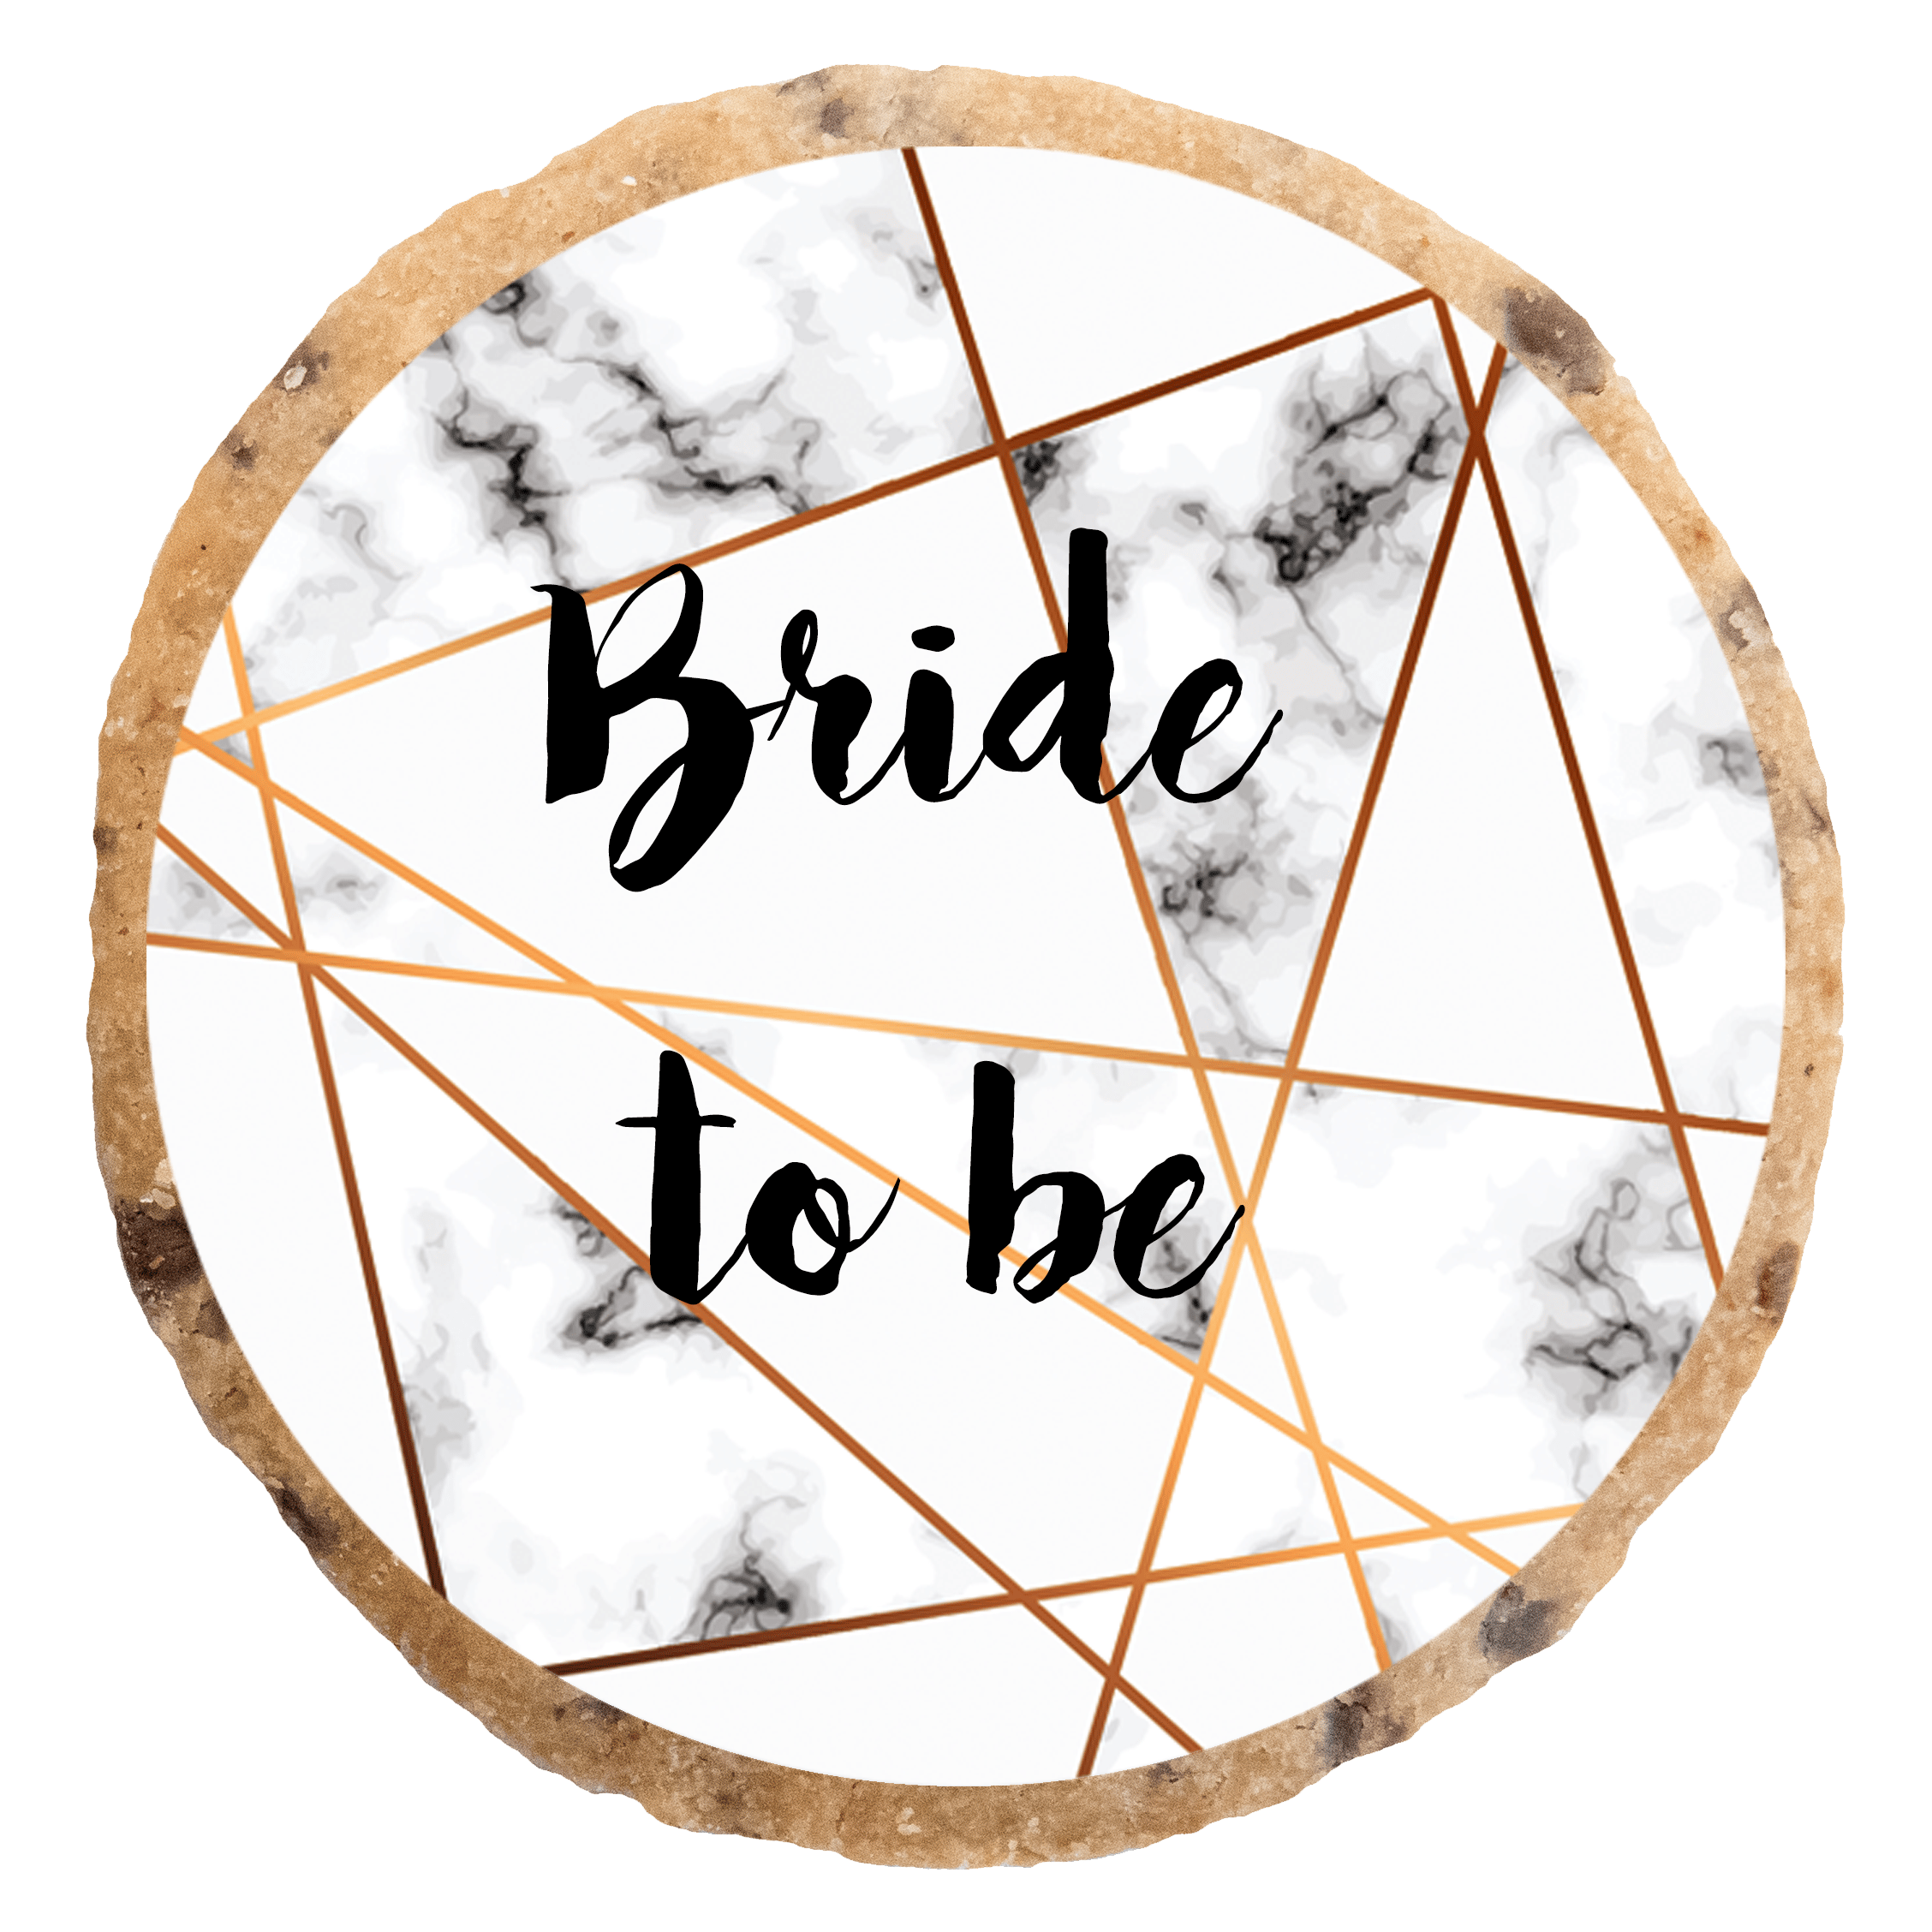 "Bride to be" MotivKEKS